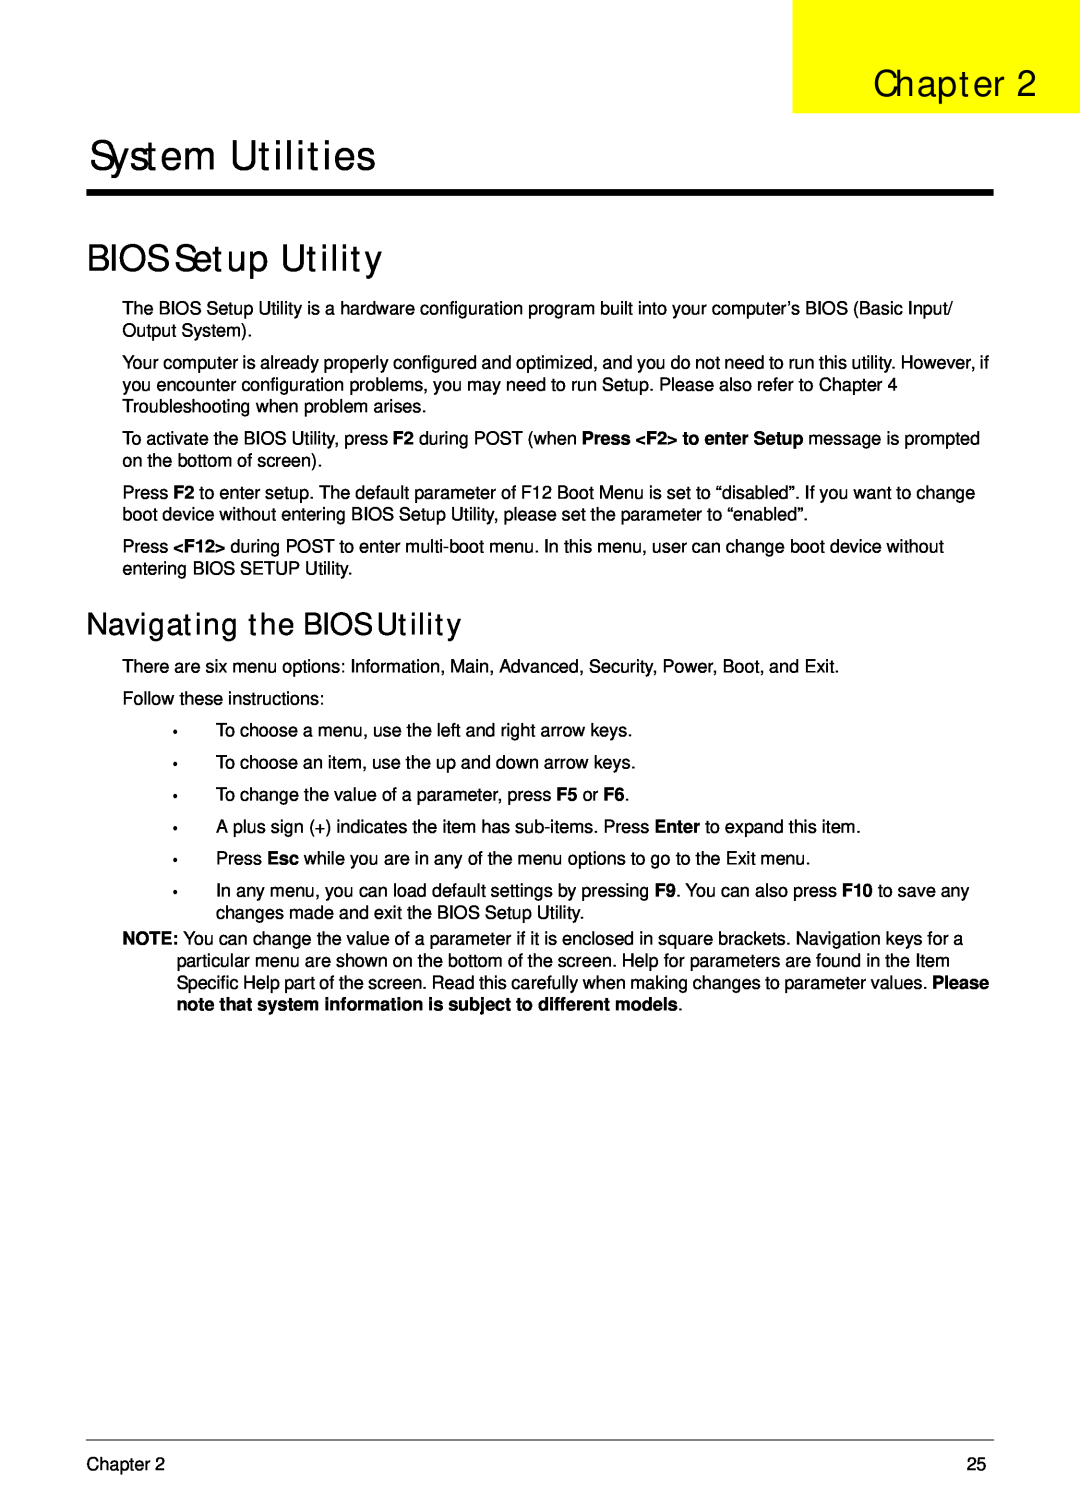 Gateway EC14 manual System Utilities, BIOS Setup Utility, Navigating the BIOS Utility, Chapter 